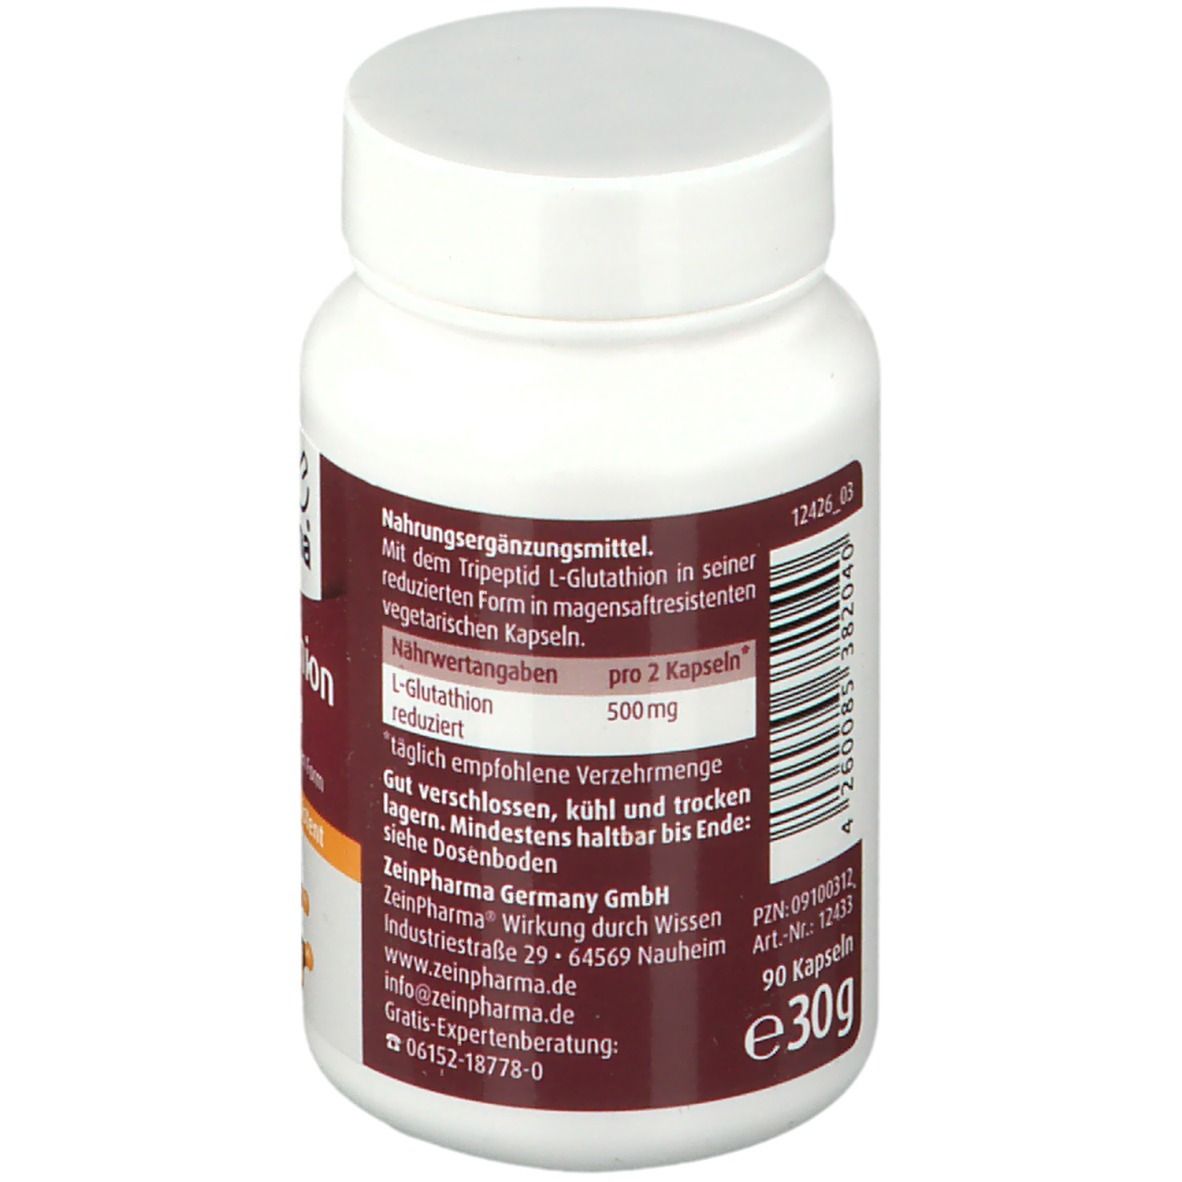 ZeinPharma® L Gluthathion Kapseln 250 mg